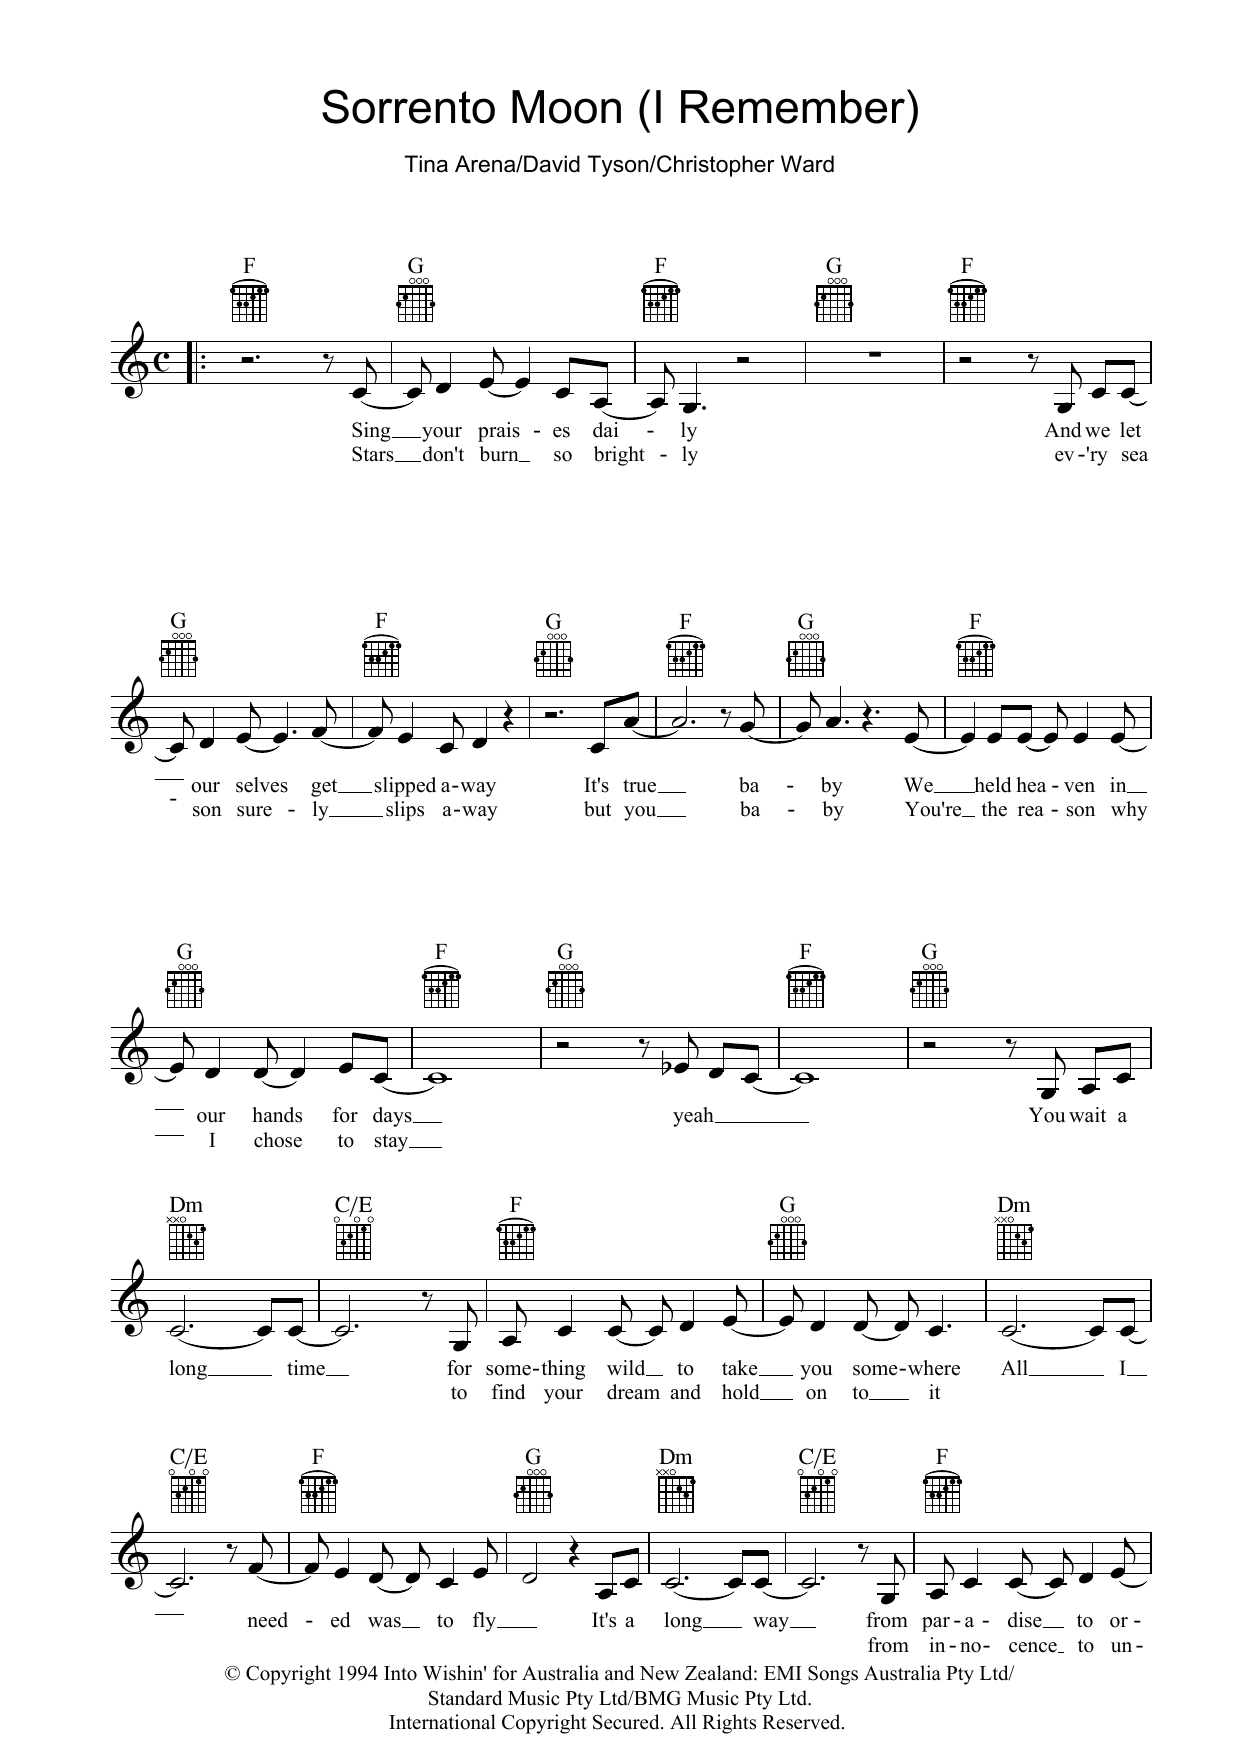 Tina Arena Sorrento Moon (I Remember) Sheet Music Notes & Chords for Melody Line, Lyrics & Chords - Download or Print PDF